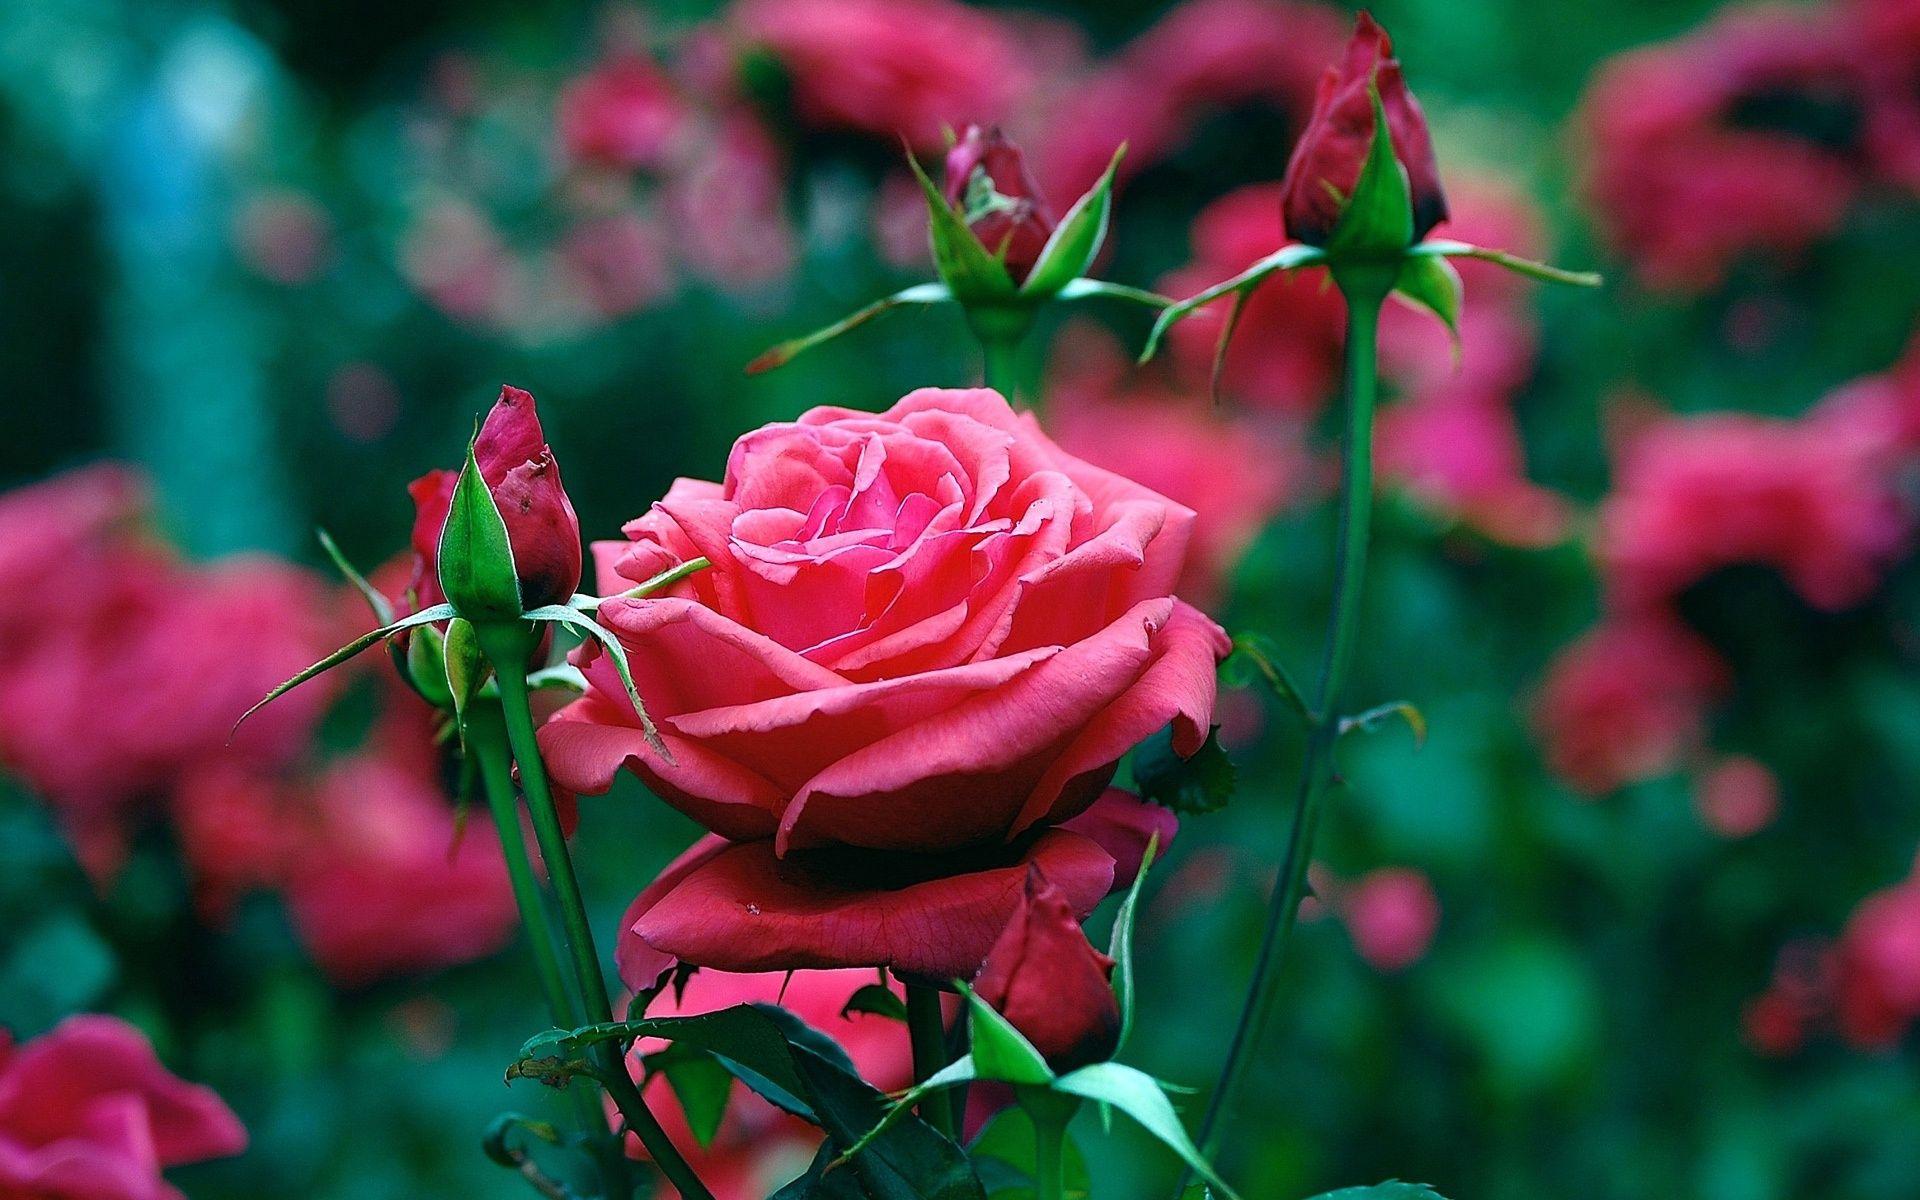 Red Rose Garden Best Flowers And Desktop In HD Pics Of Mobile Phones